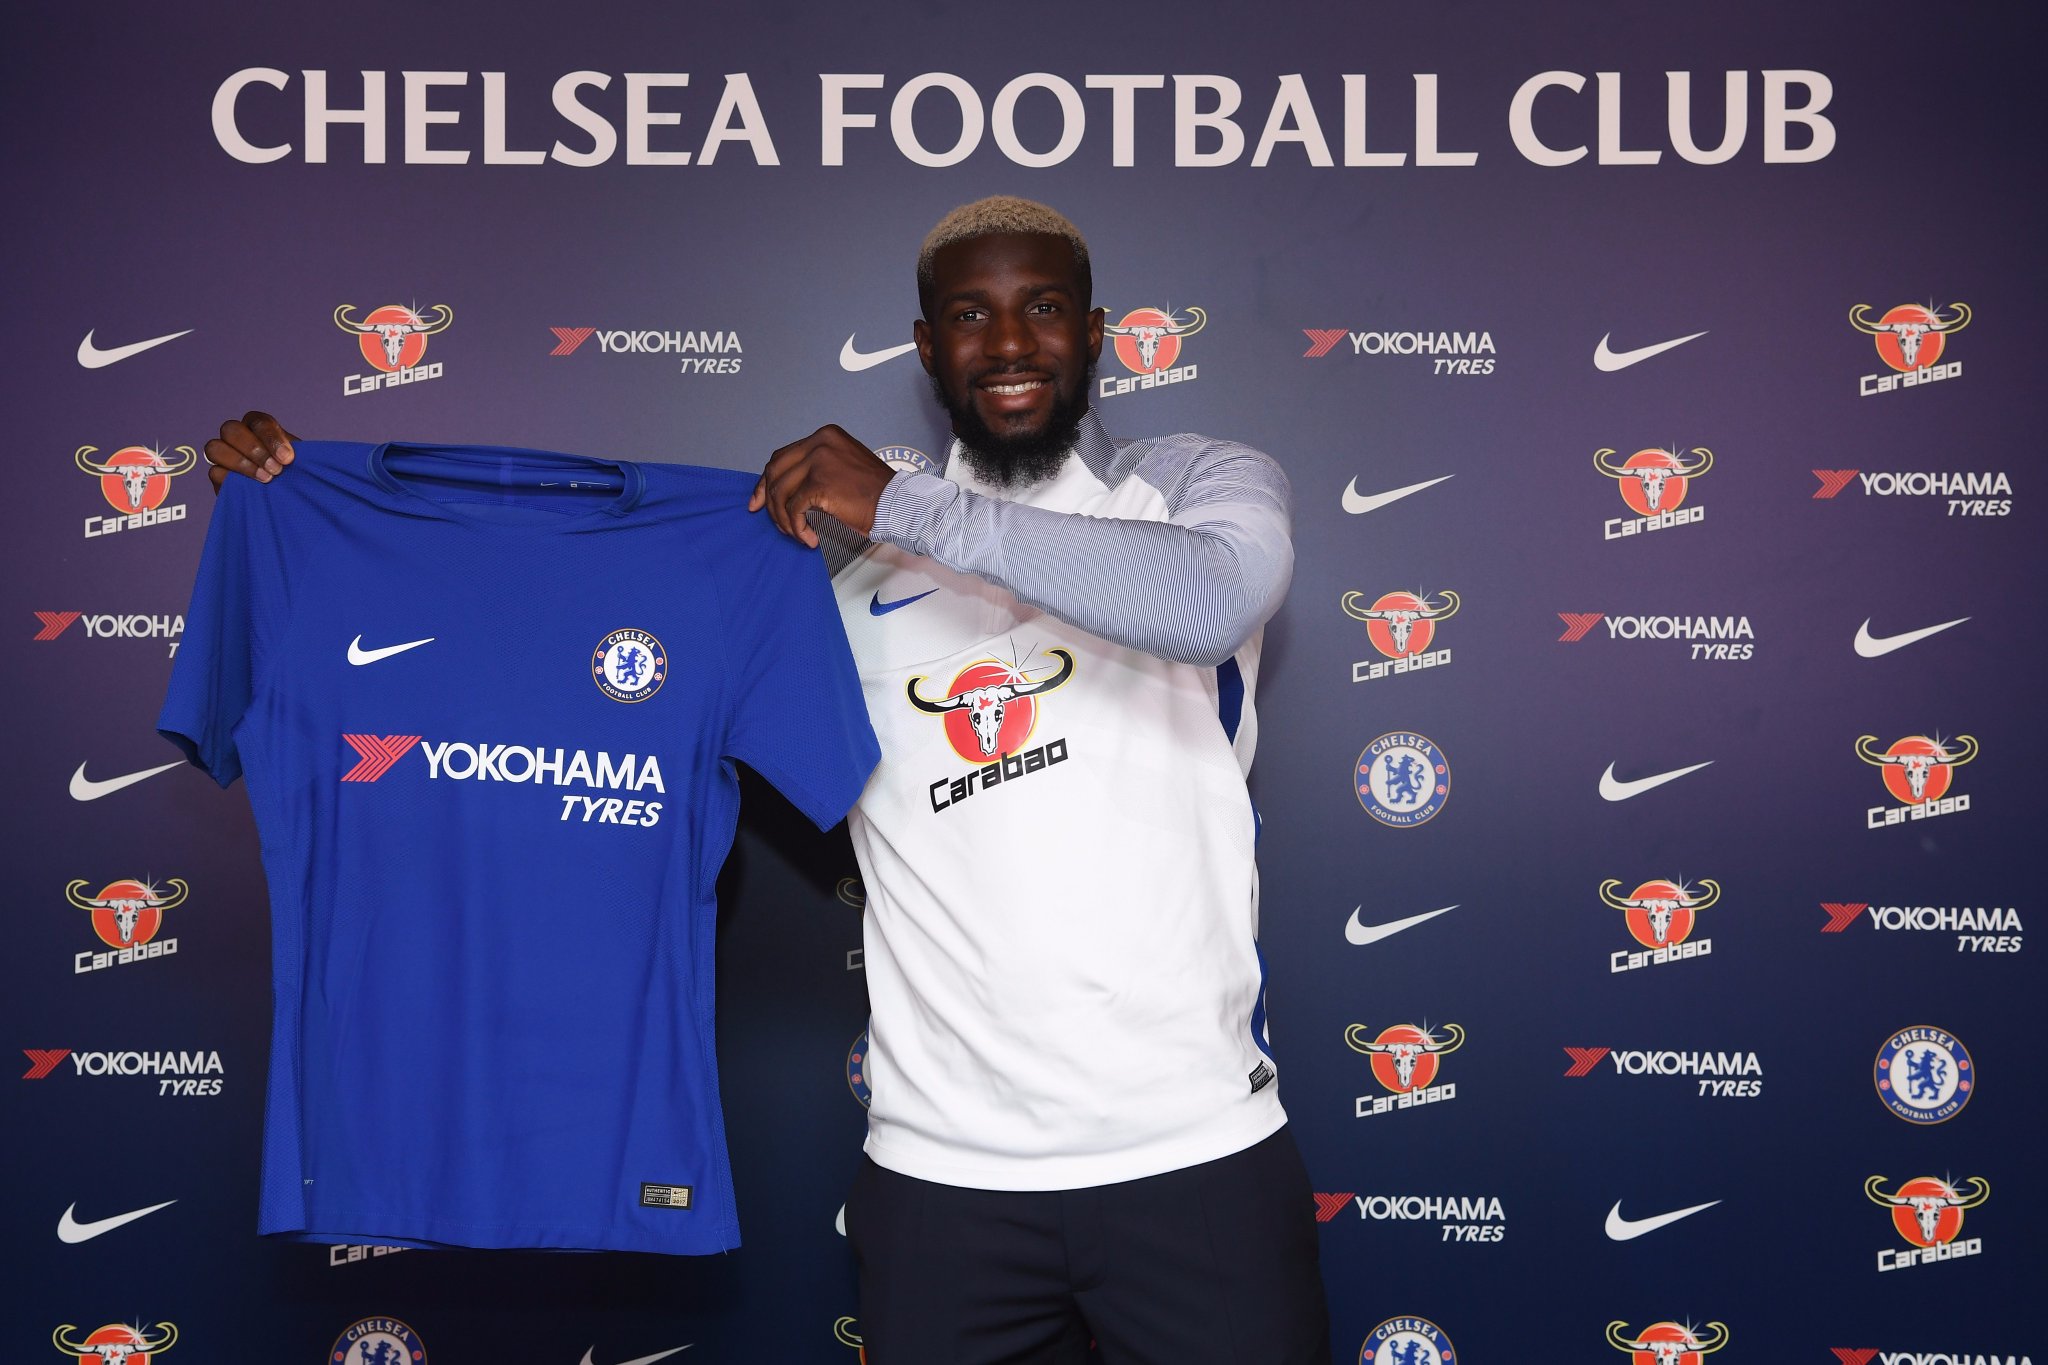 Chelsea complete the signing of Tiemoue Bakayoko from Monaco